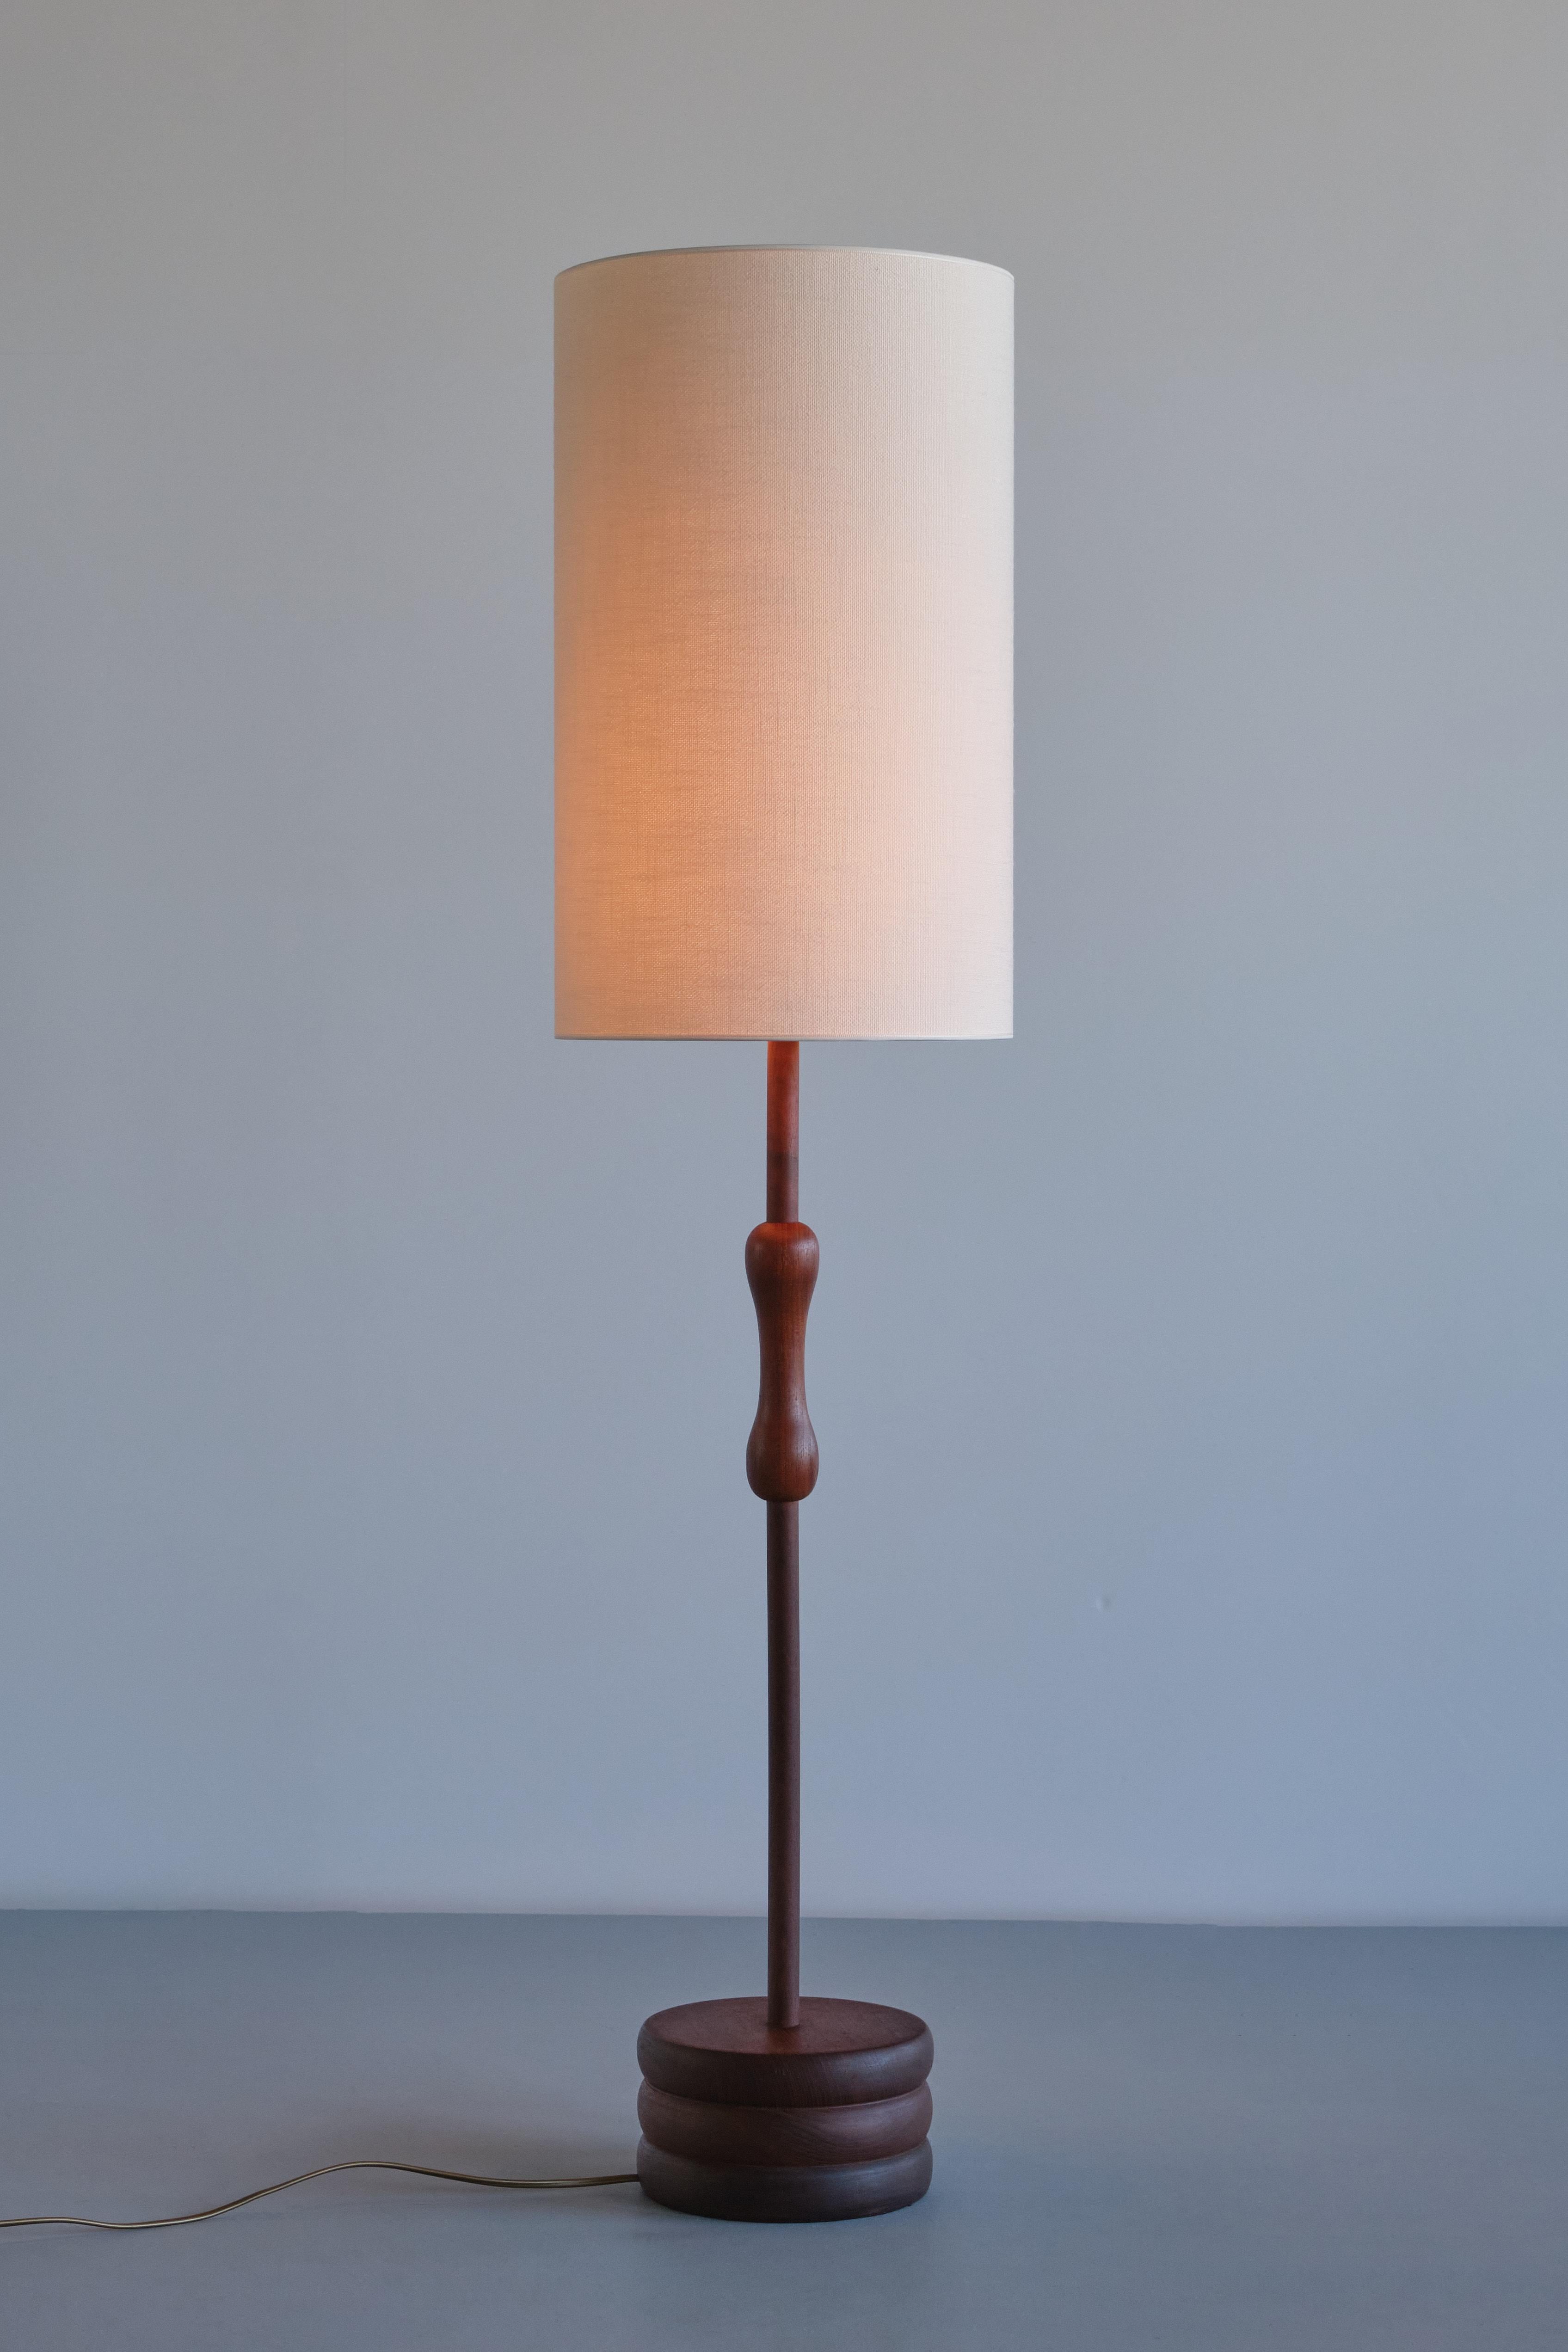 Scandinavian Modern Organic Modern Floor / Table Lamp in Solid Teak Wood, Sweden, 1950s For Sale